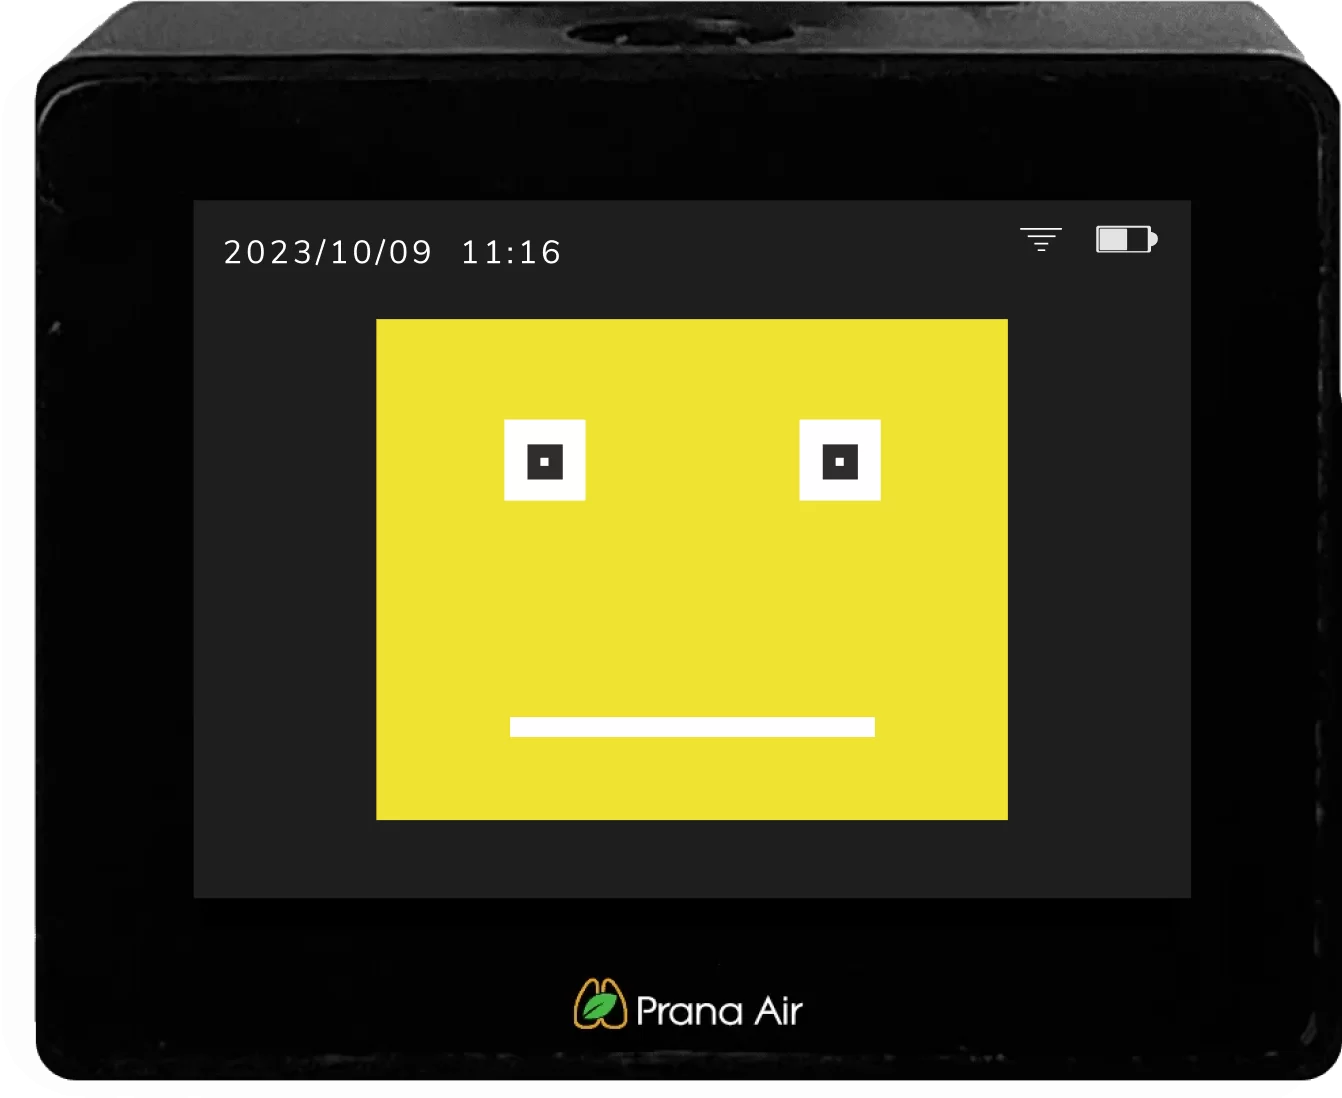 prana air co2 monitor face screen